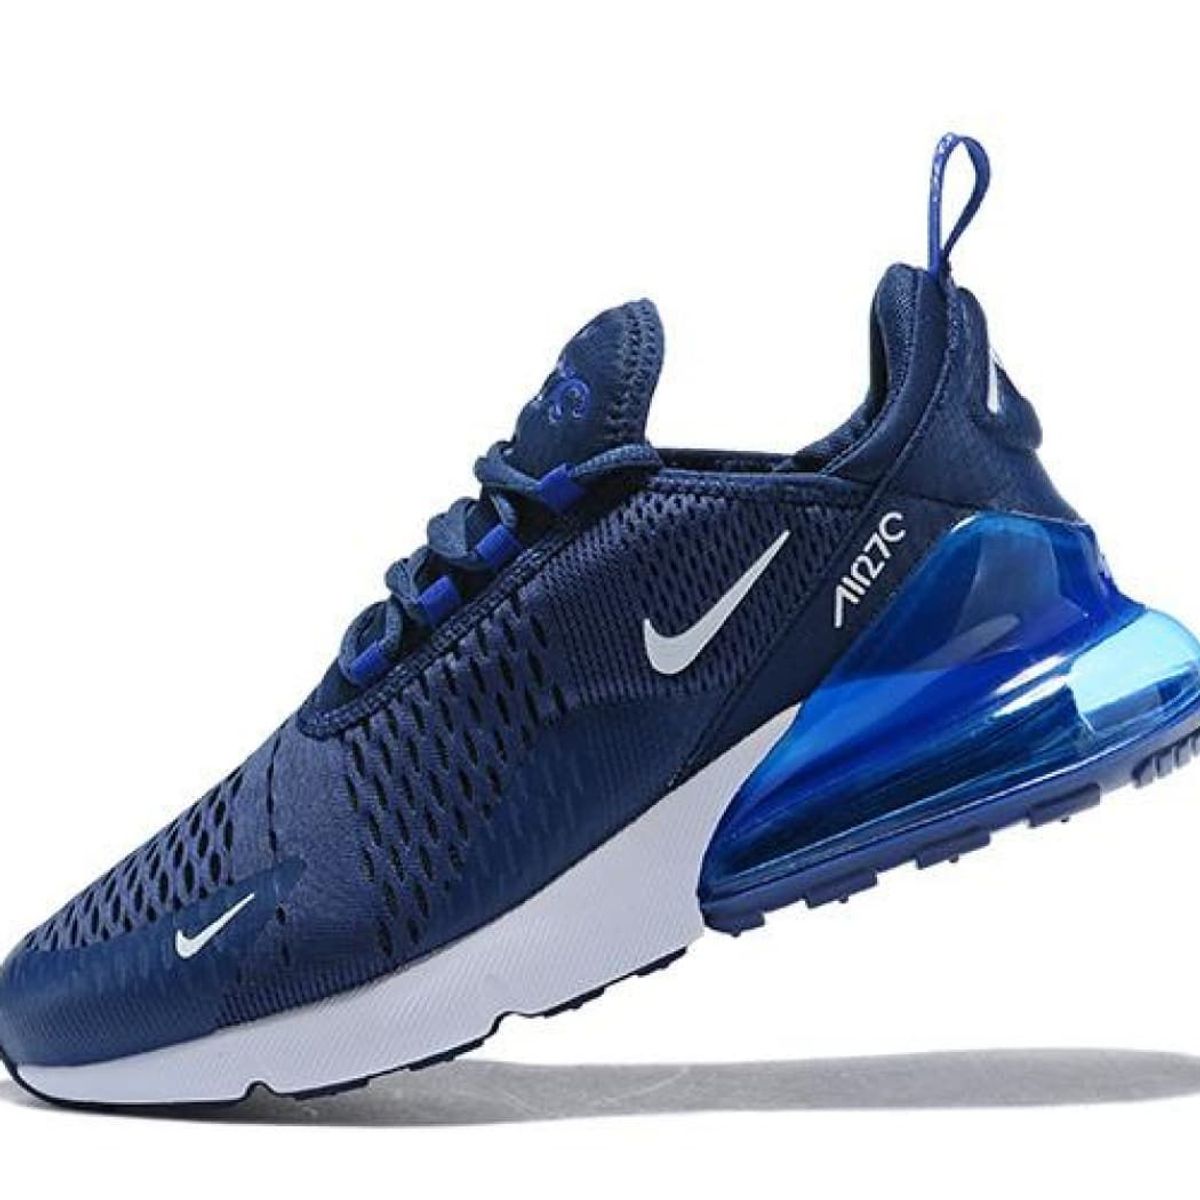 nike air 27c azul Nike online – Compra productos Nike baratos